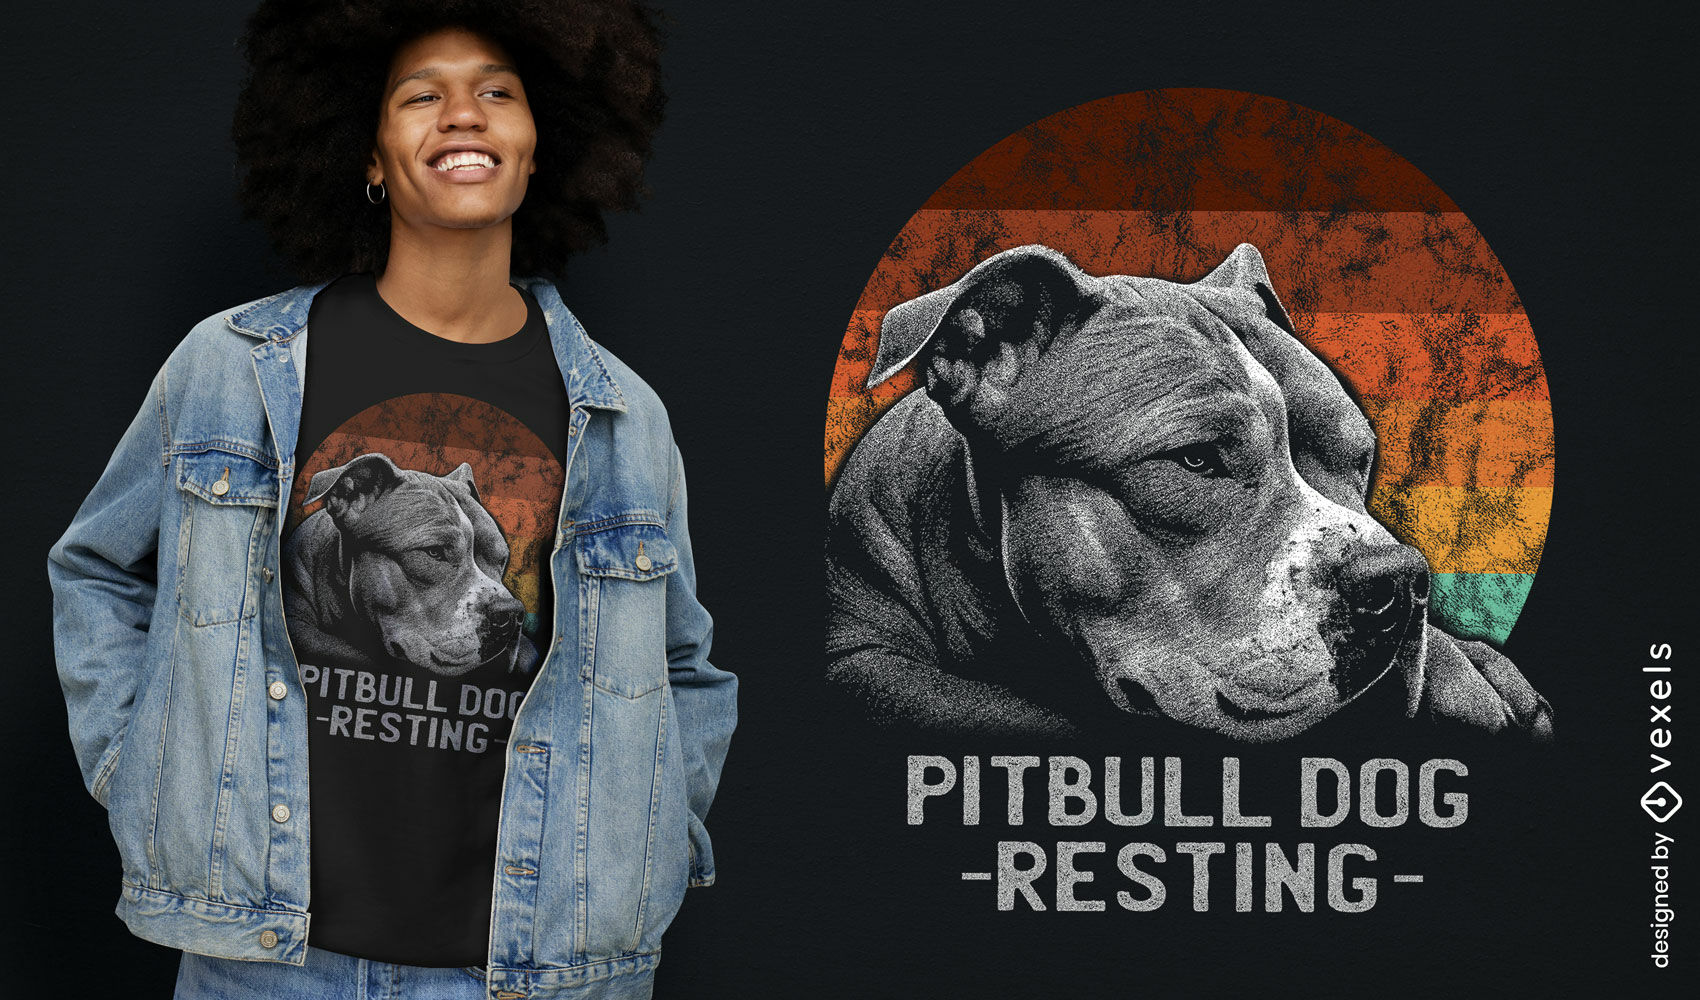 Resting pitbull dog t-shirt design